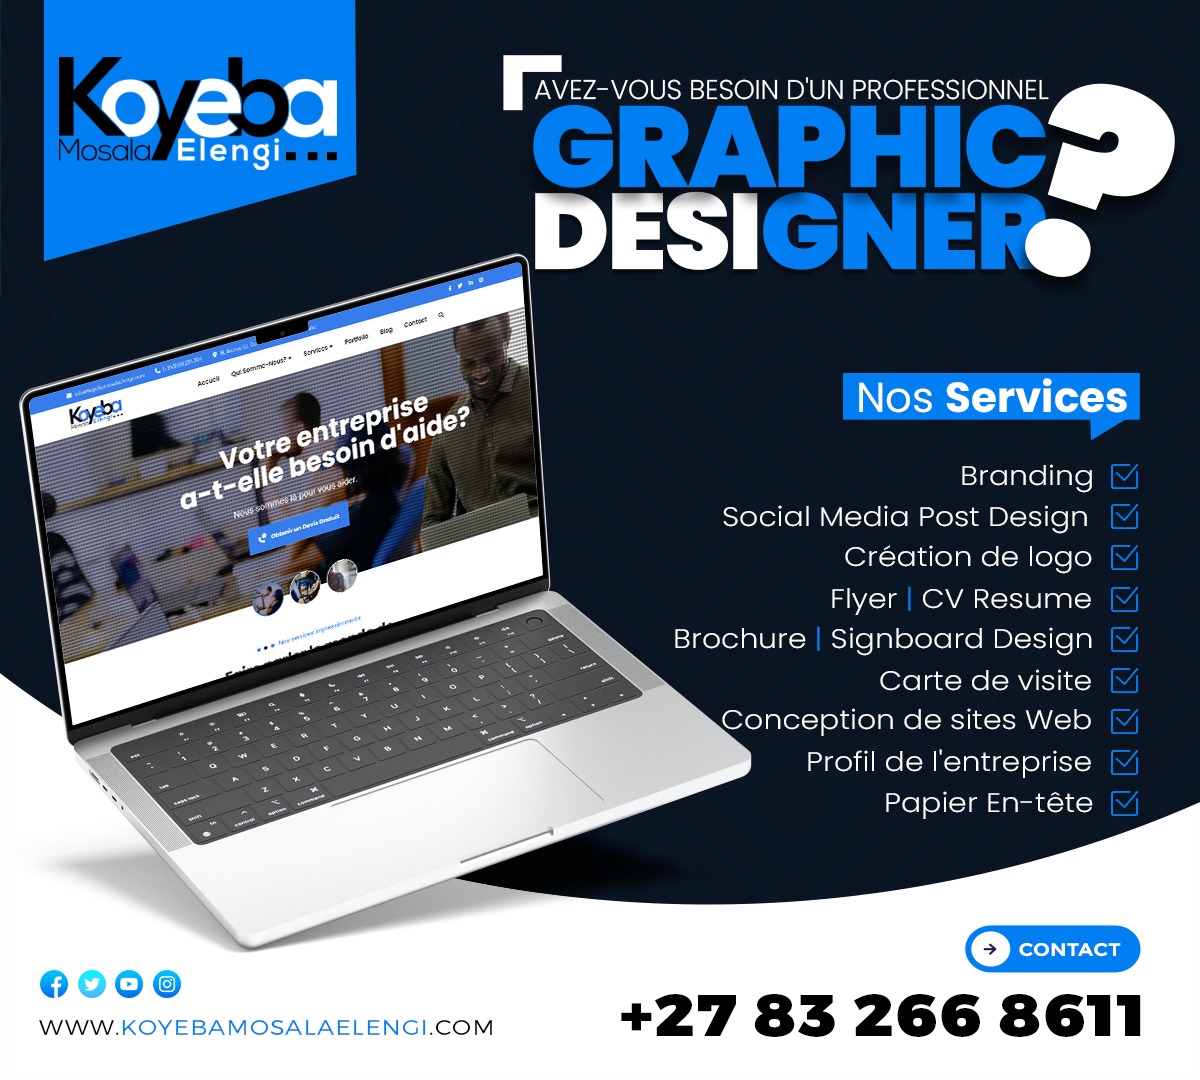 Koyeba Mosala Elengi👌
Chez c'est la qualité👌
#digitalart #DigitalArtist #GraphicDesign #digitalmarketing #marketingagency #marketingbusiness #GraphicDesigner